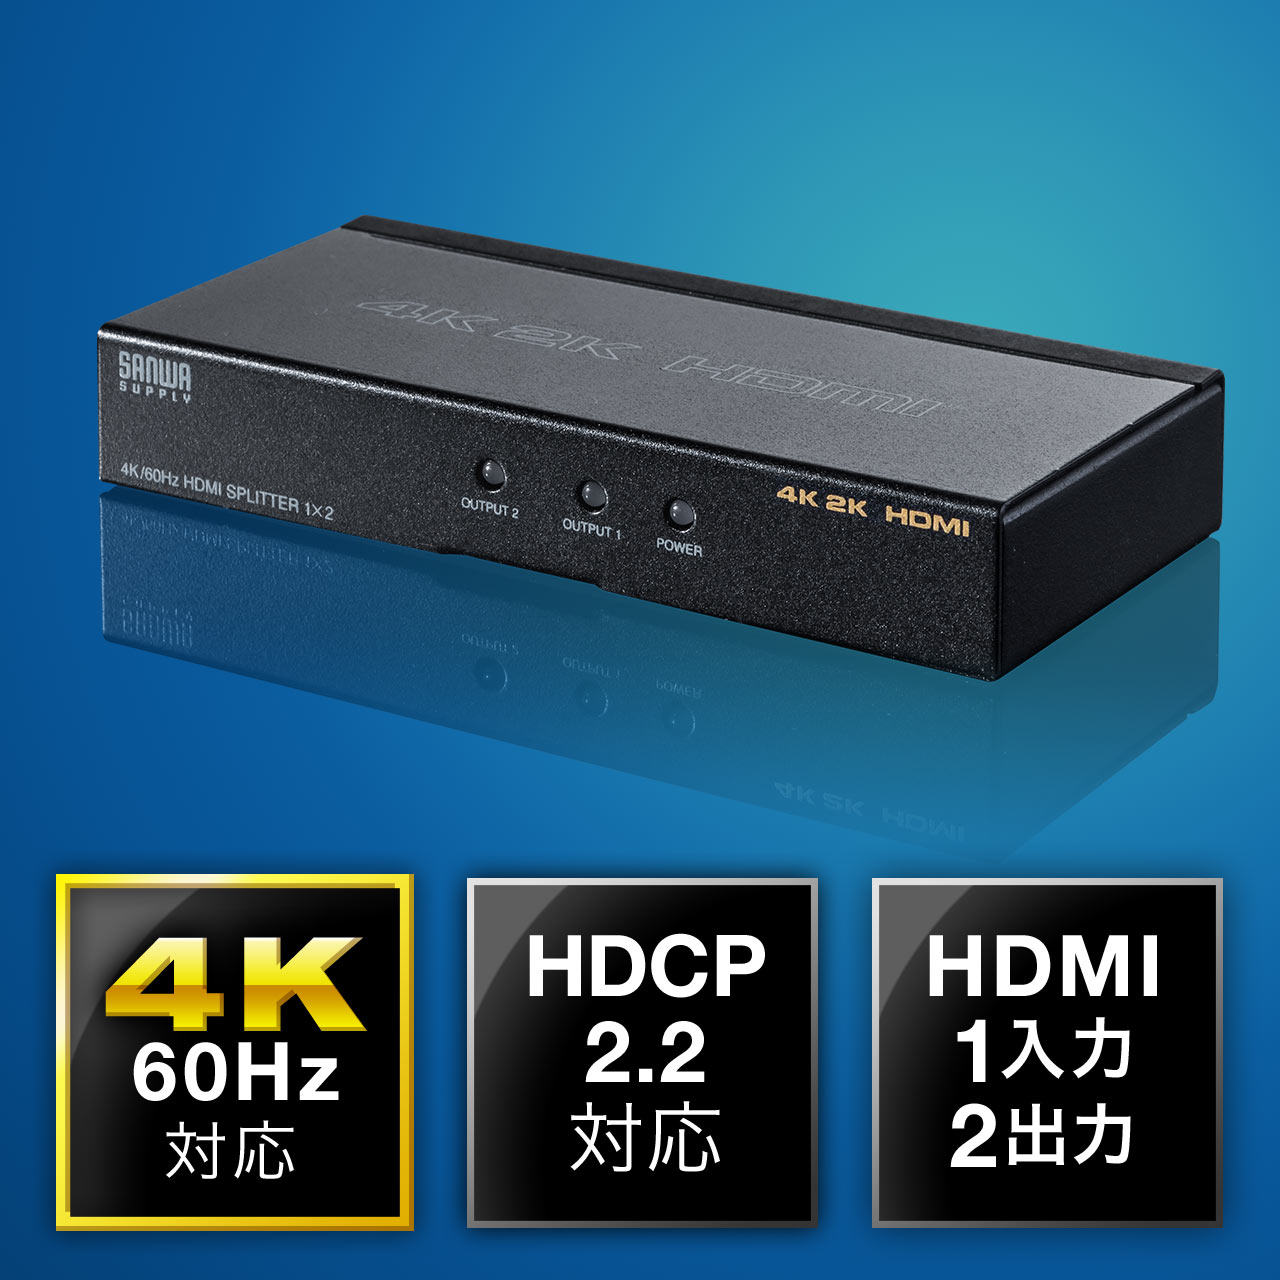 HDMI分配器 1入力 2出力 4K/60Hz対応 HDR非対応 HDMIスプリッター 400-VGA013